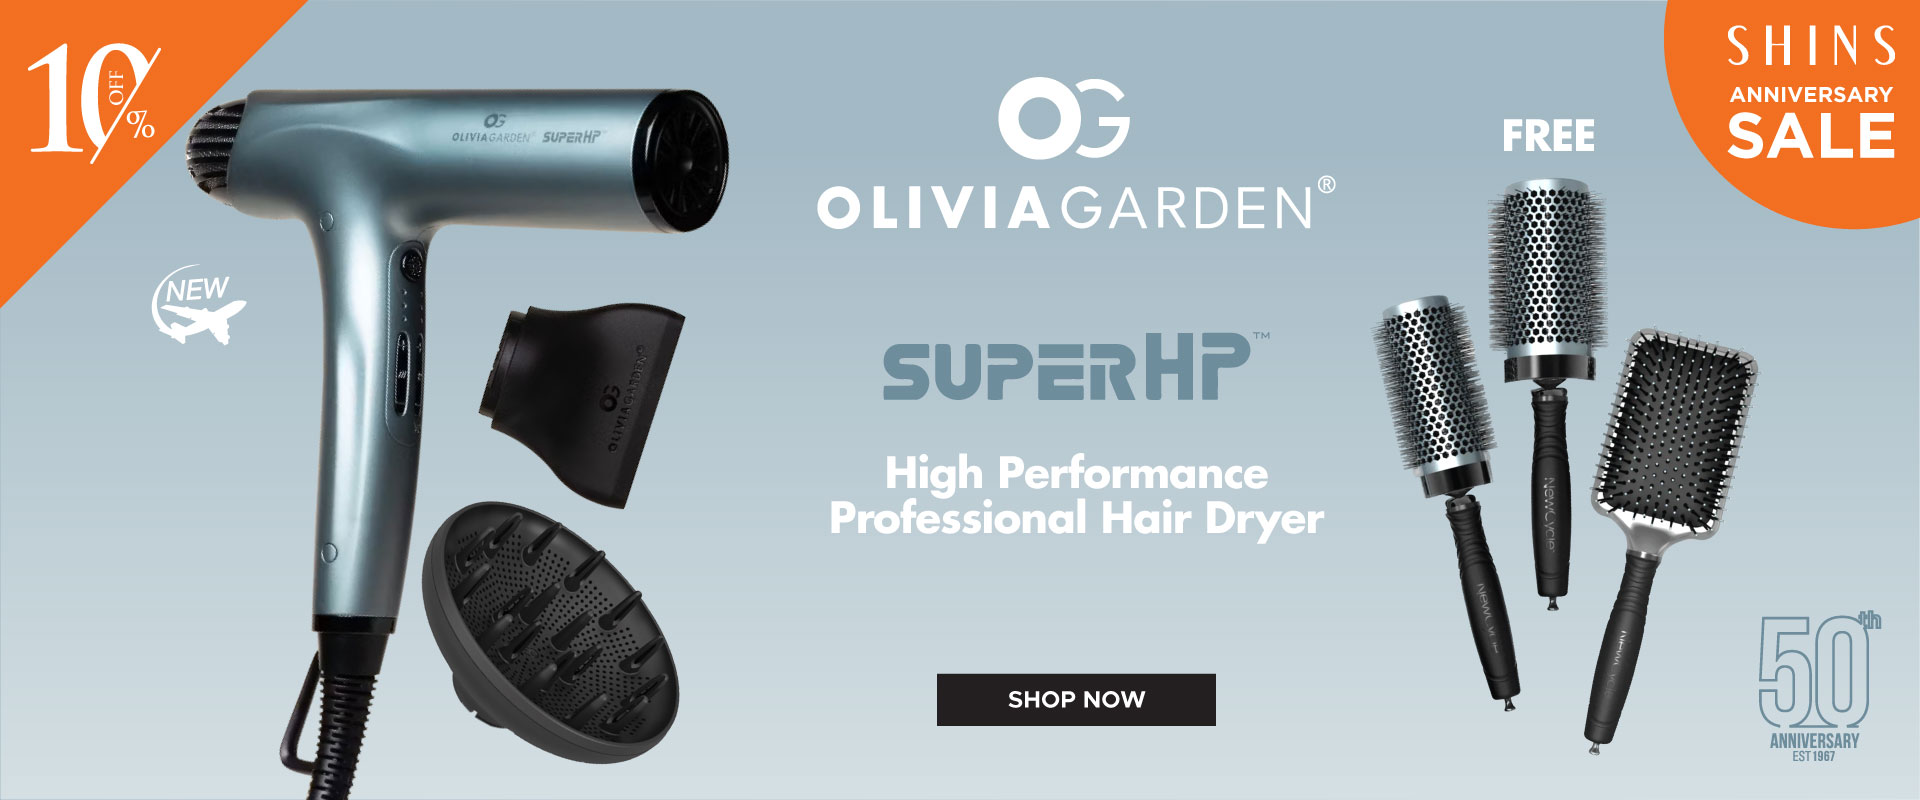 Anniversary Sale Olivia Garden Super hp